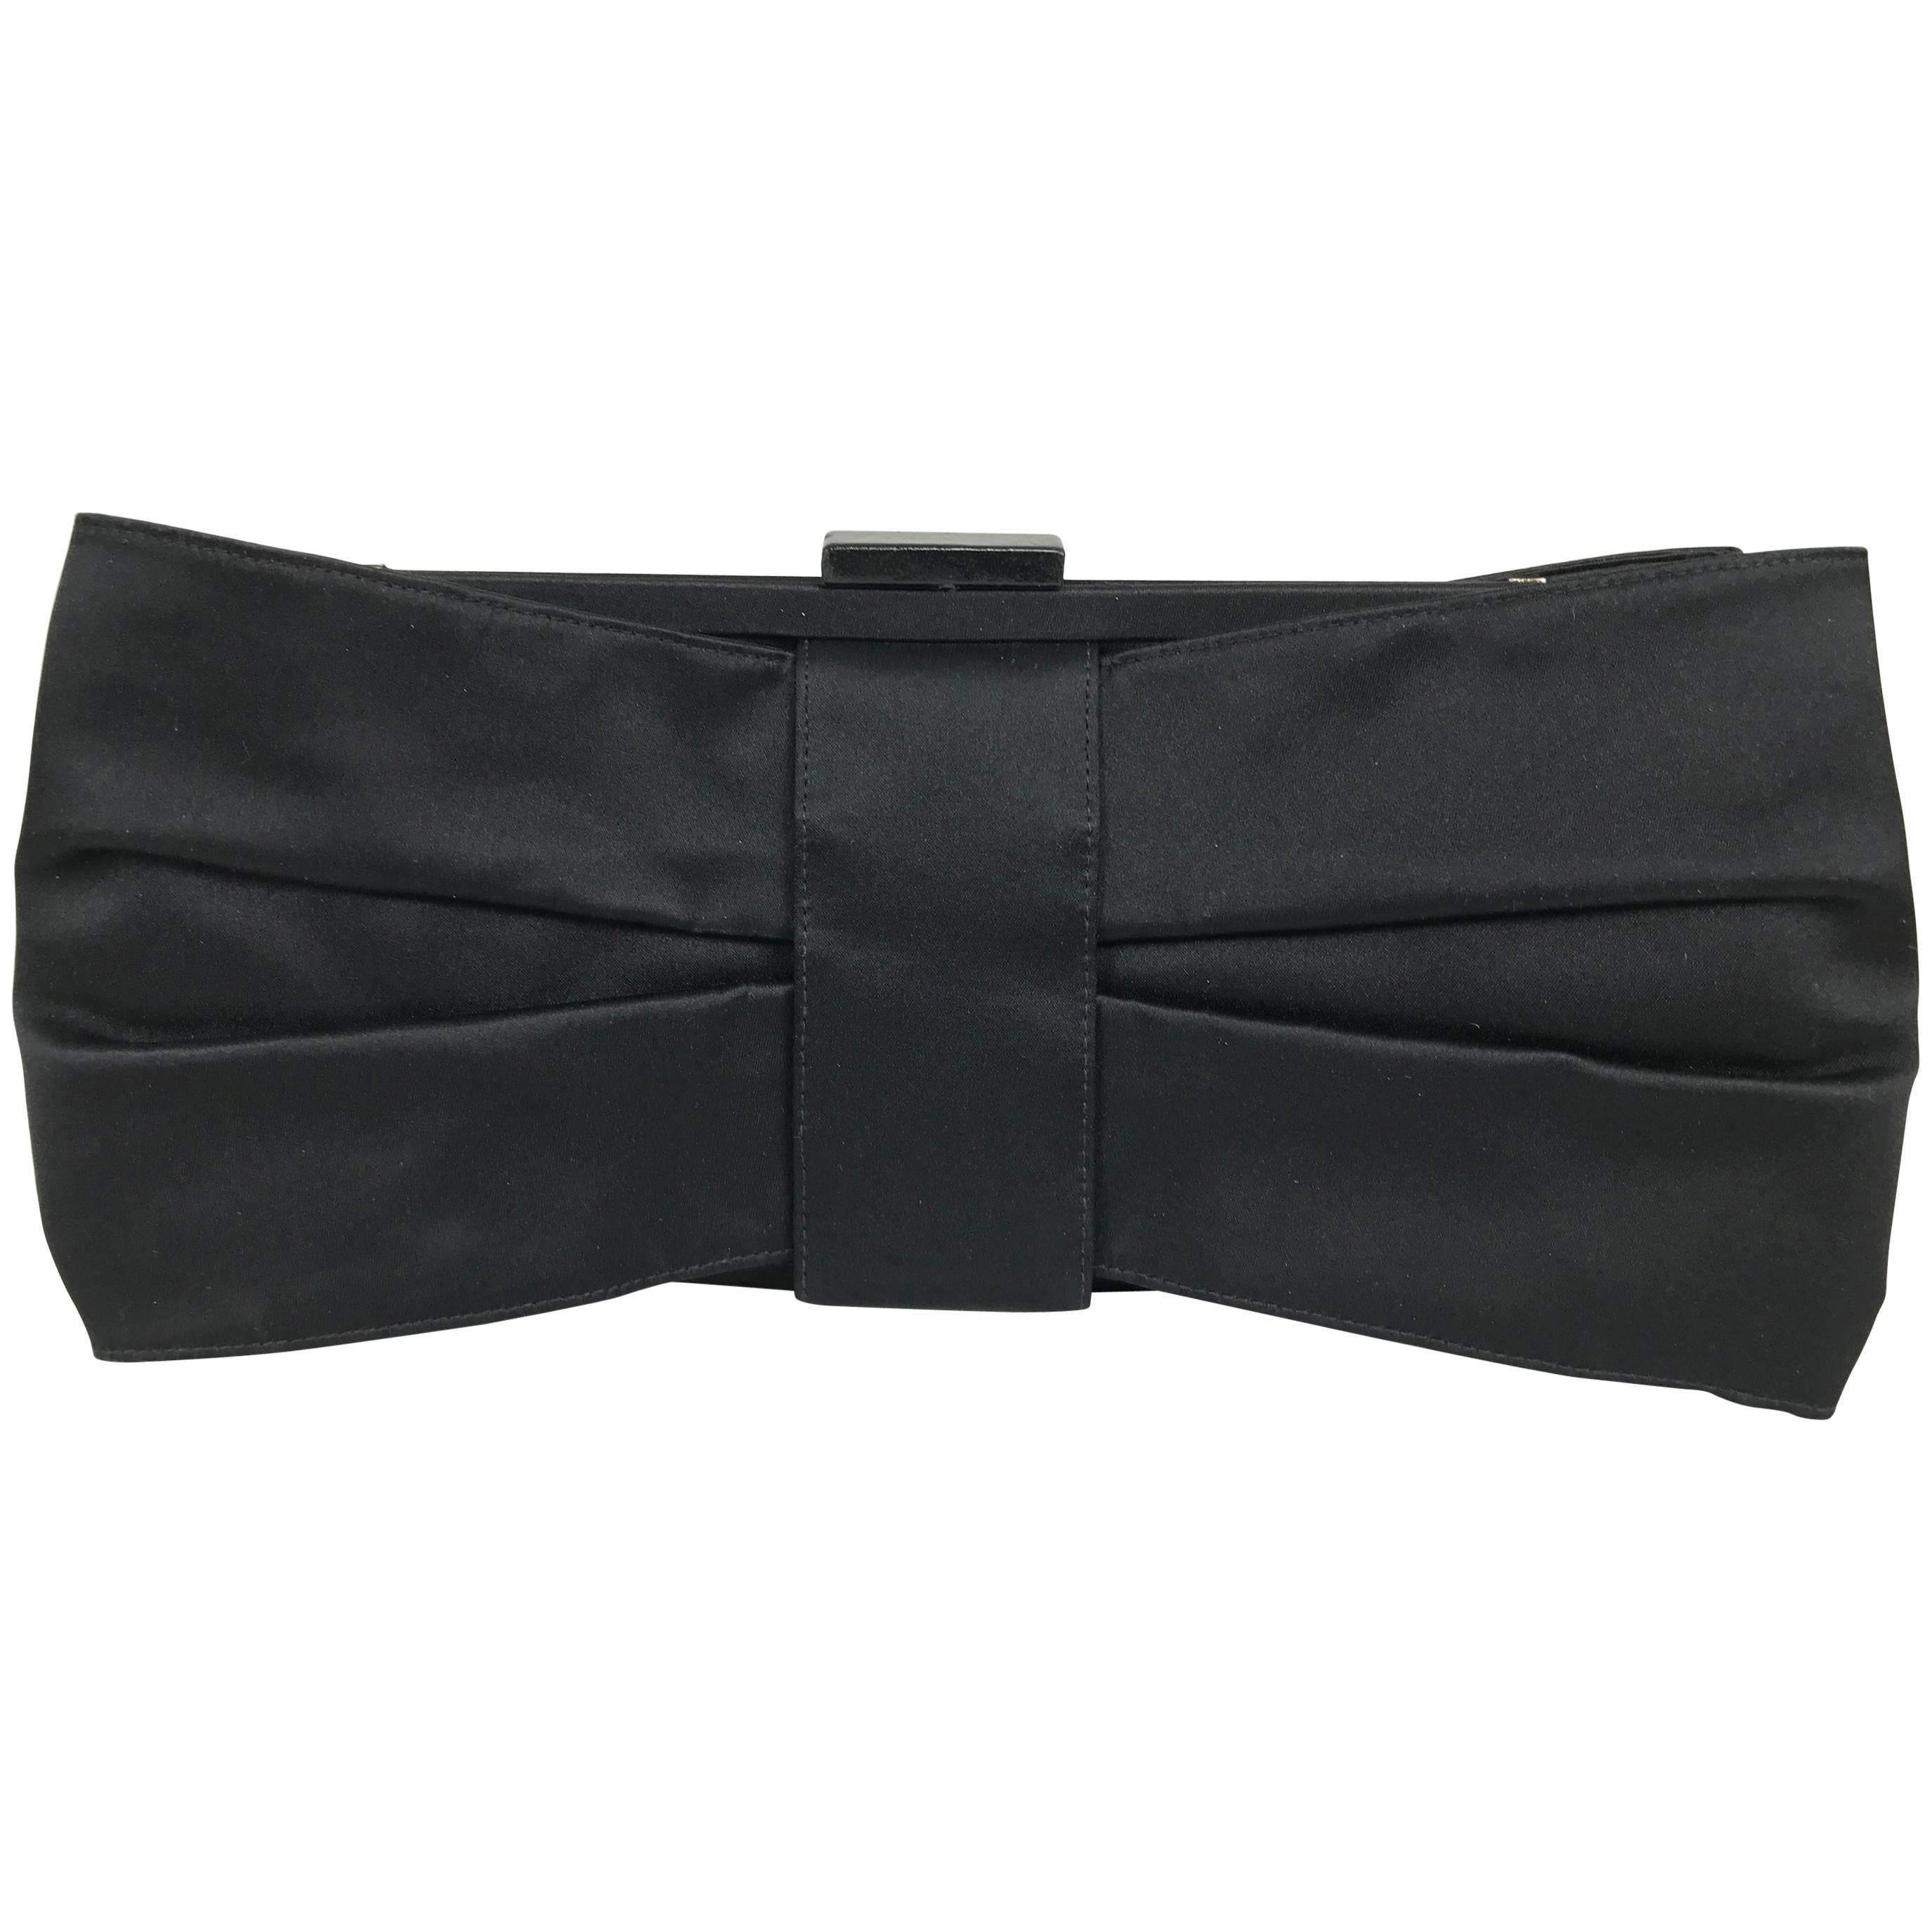 Oscar de la Renta black silk bow shape clutch evening or shoulder bag